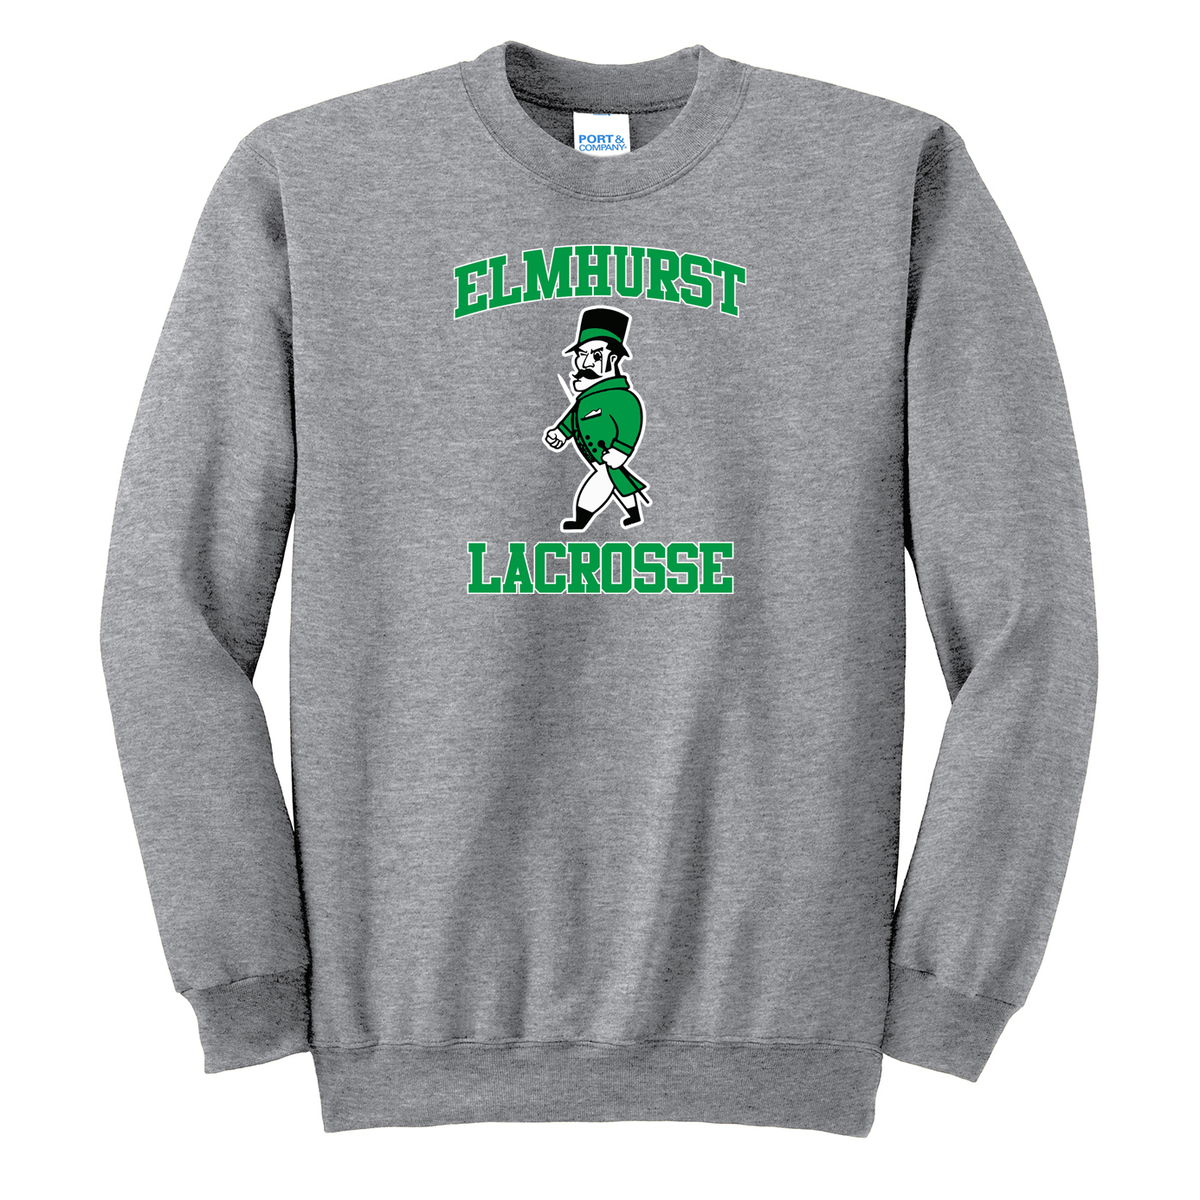 Elmhurst Lacrosse Crew Neck Sweater